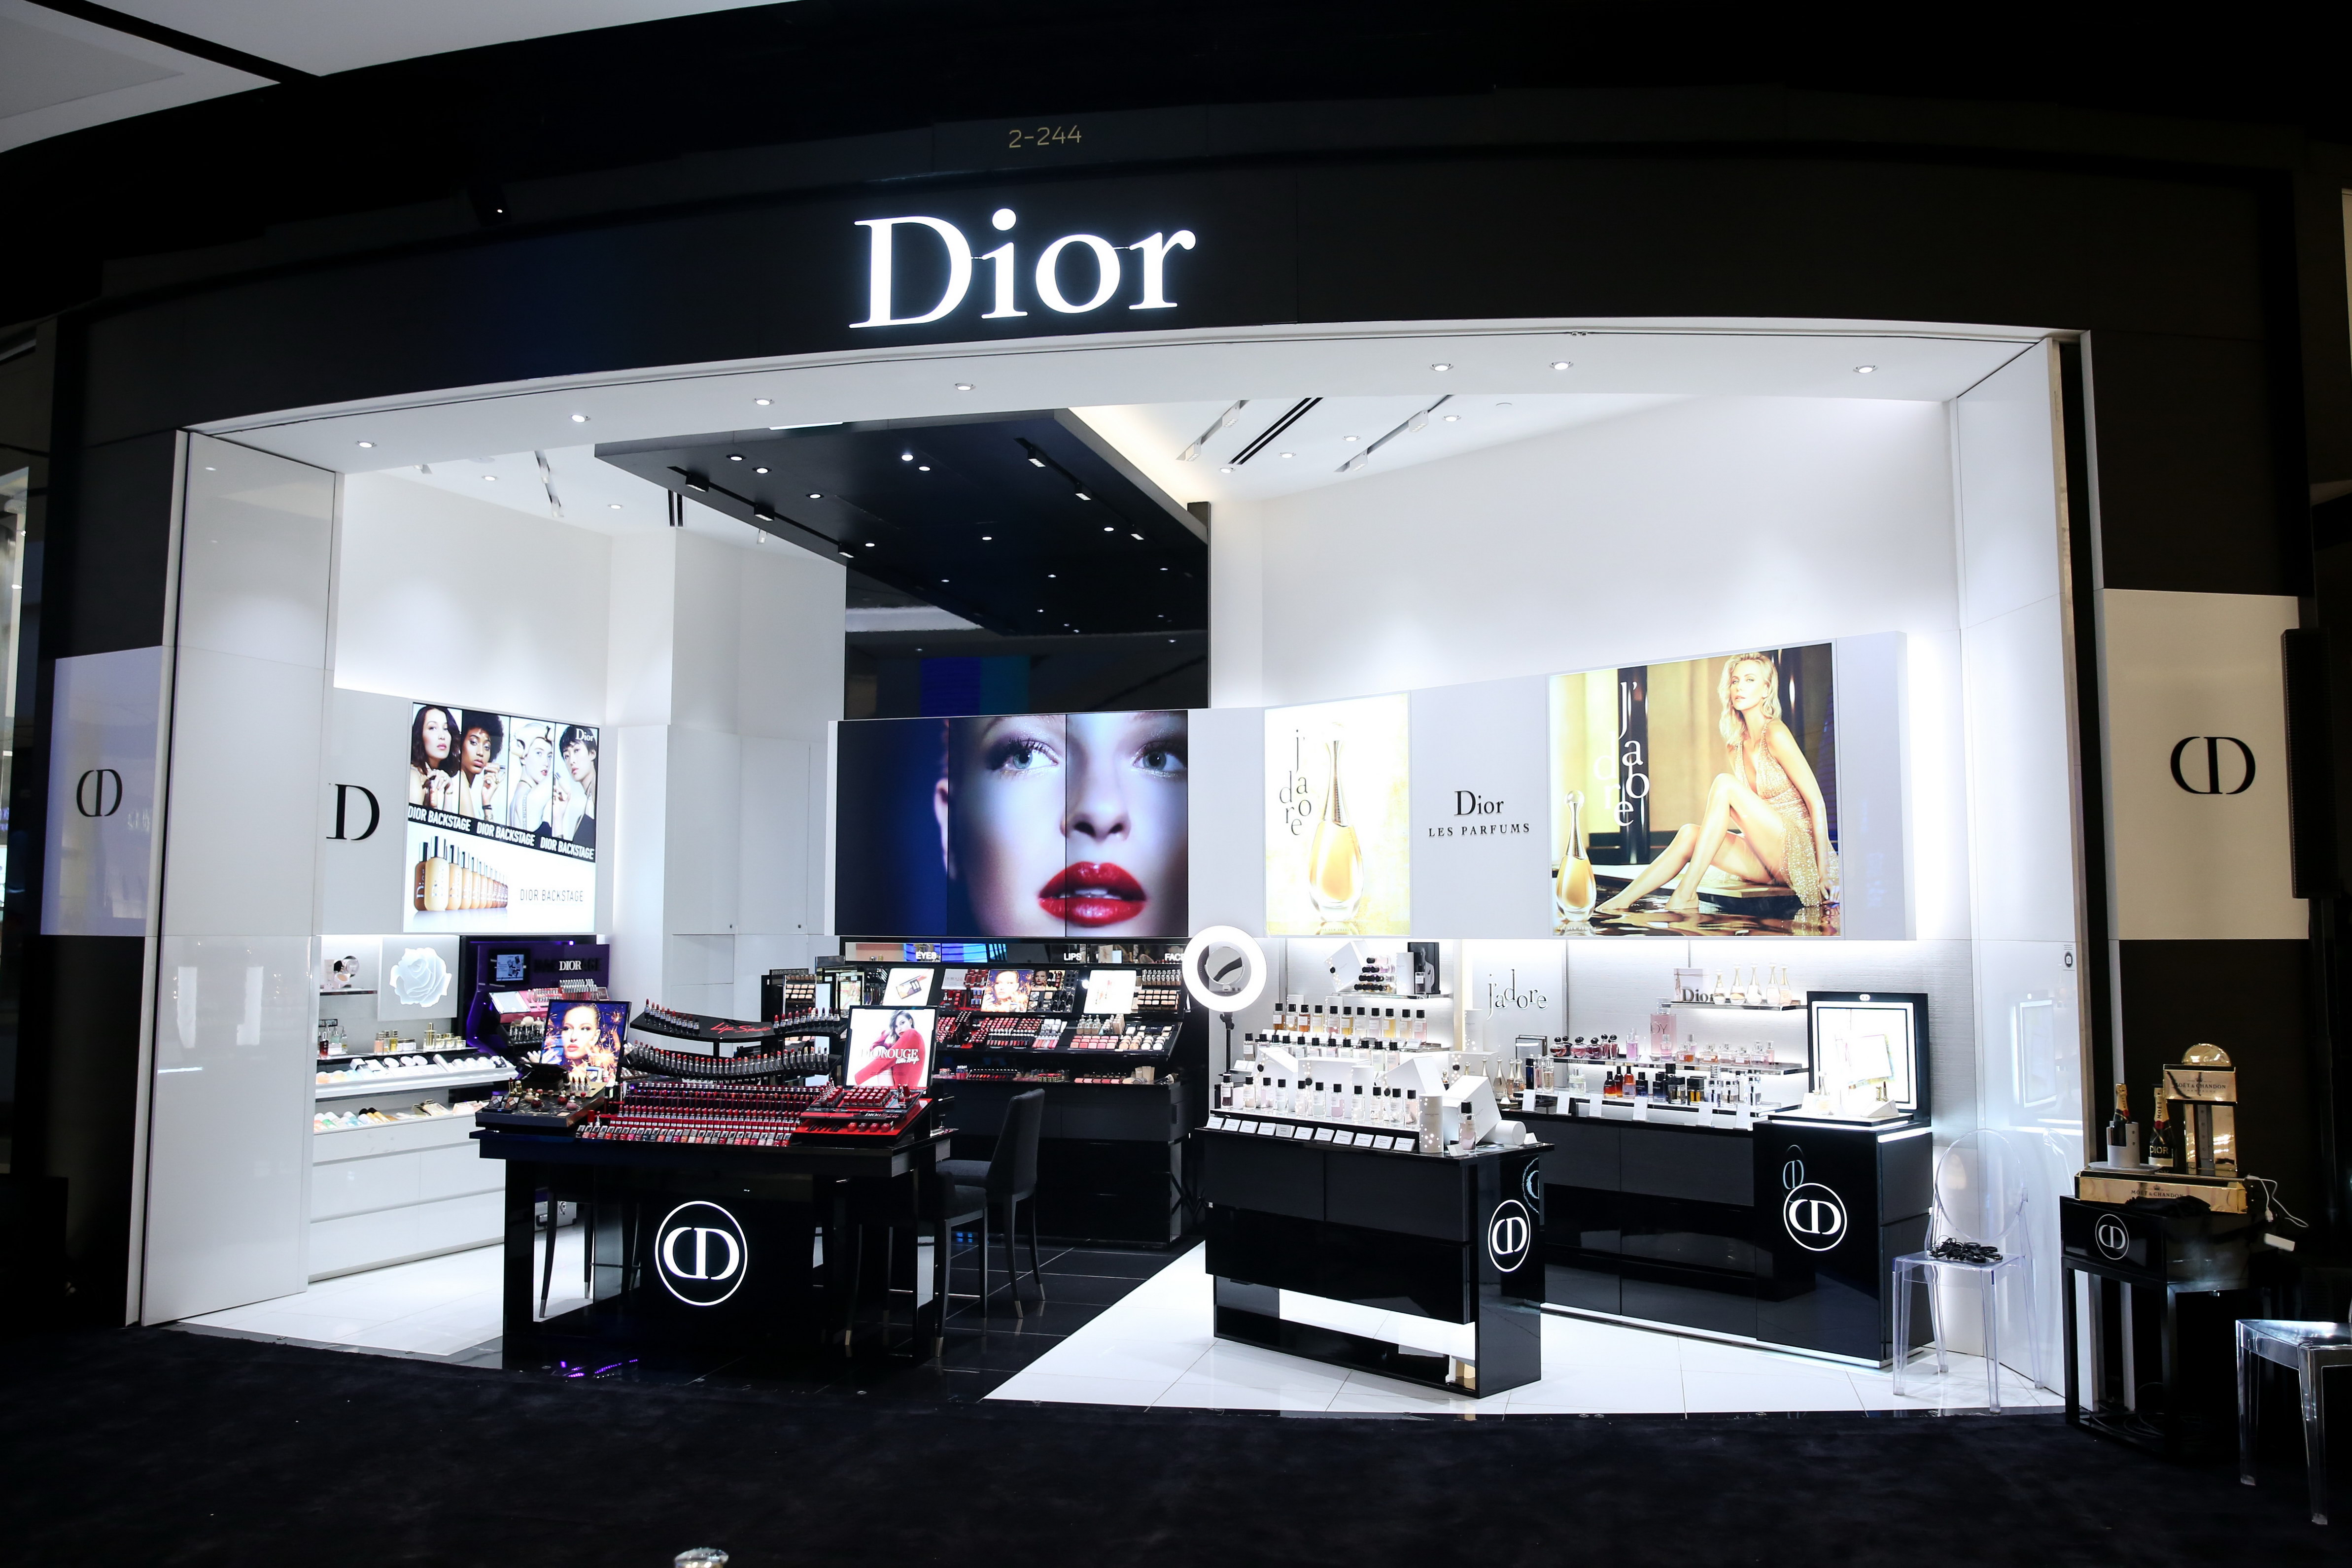 בושם, איפור , בוטיק דיור, דיור, ג'וי, ז'אדור, כריסטיאן דיור, Dior, Dior make up, Joy, dior boutique